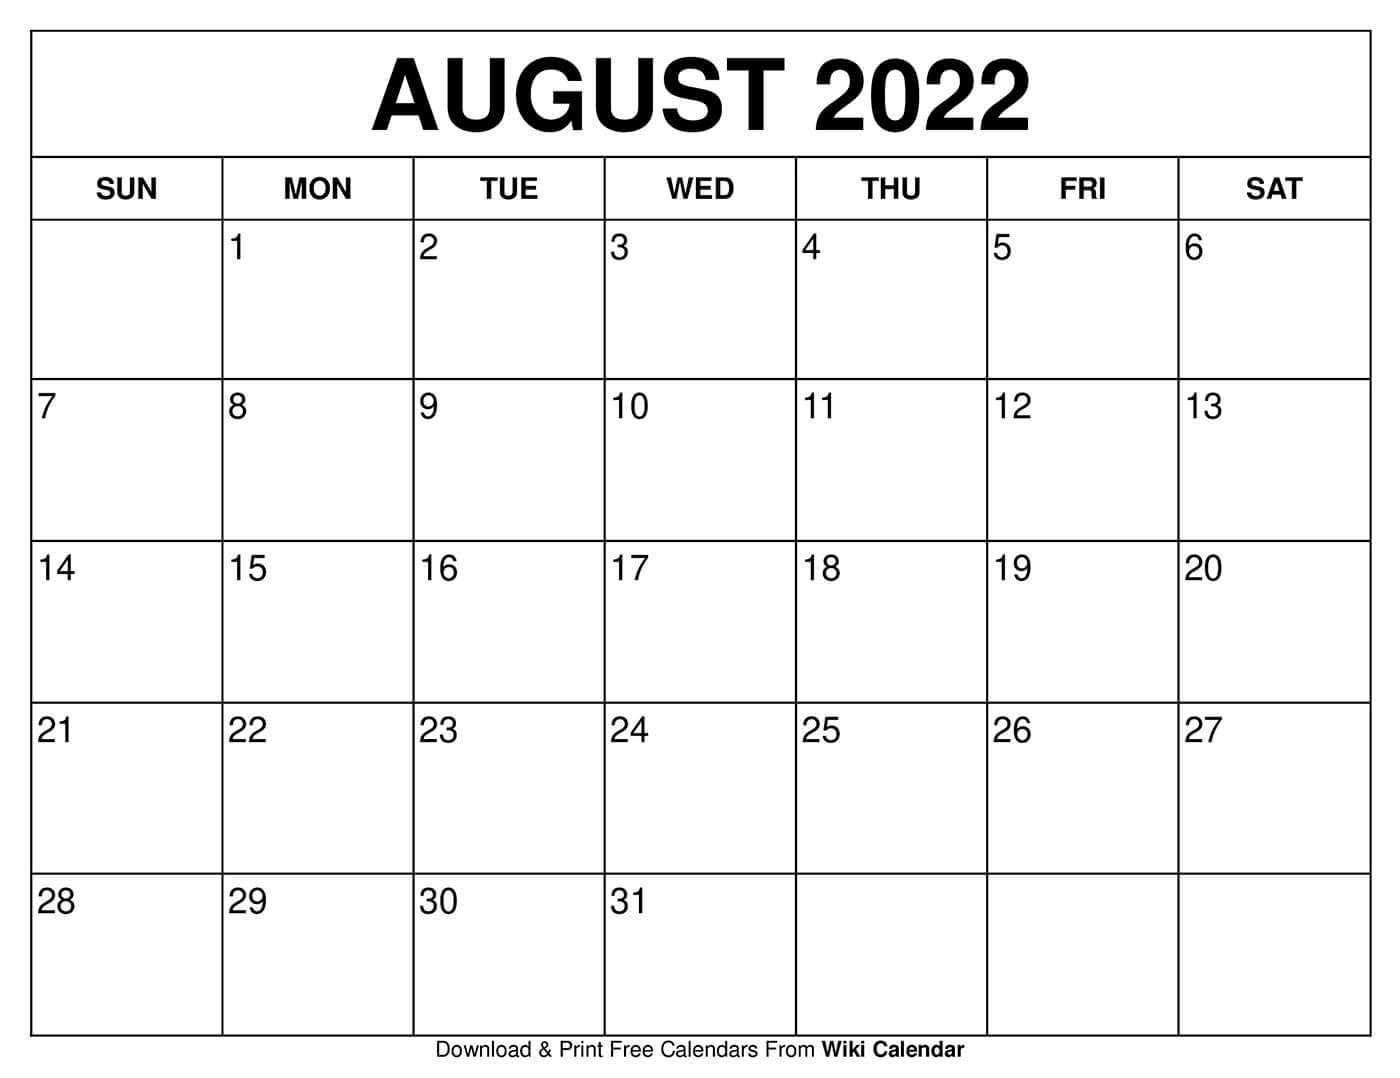 free-printable-august-2022-calendars-wiki-calendar